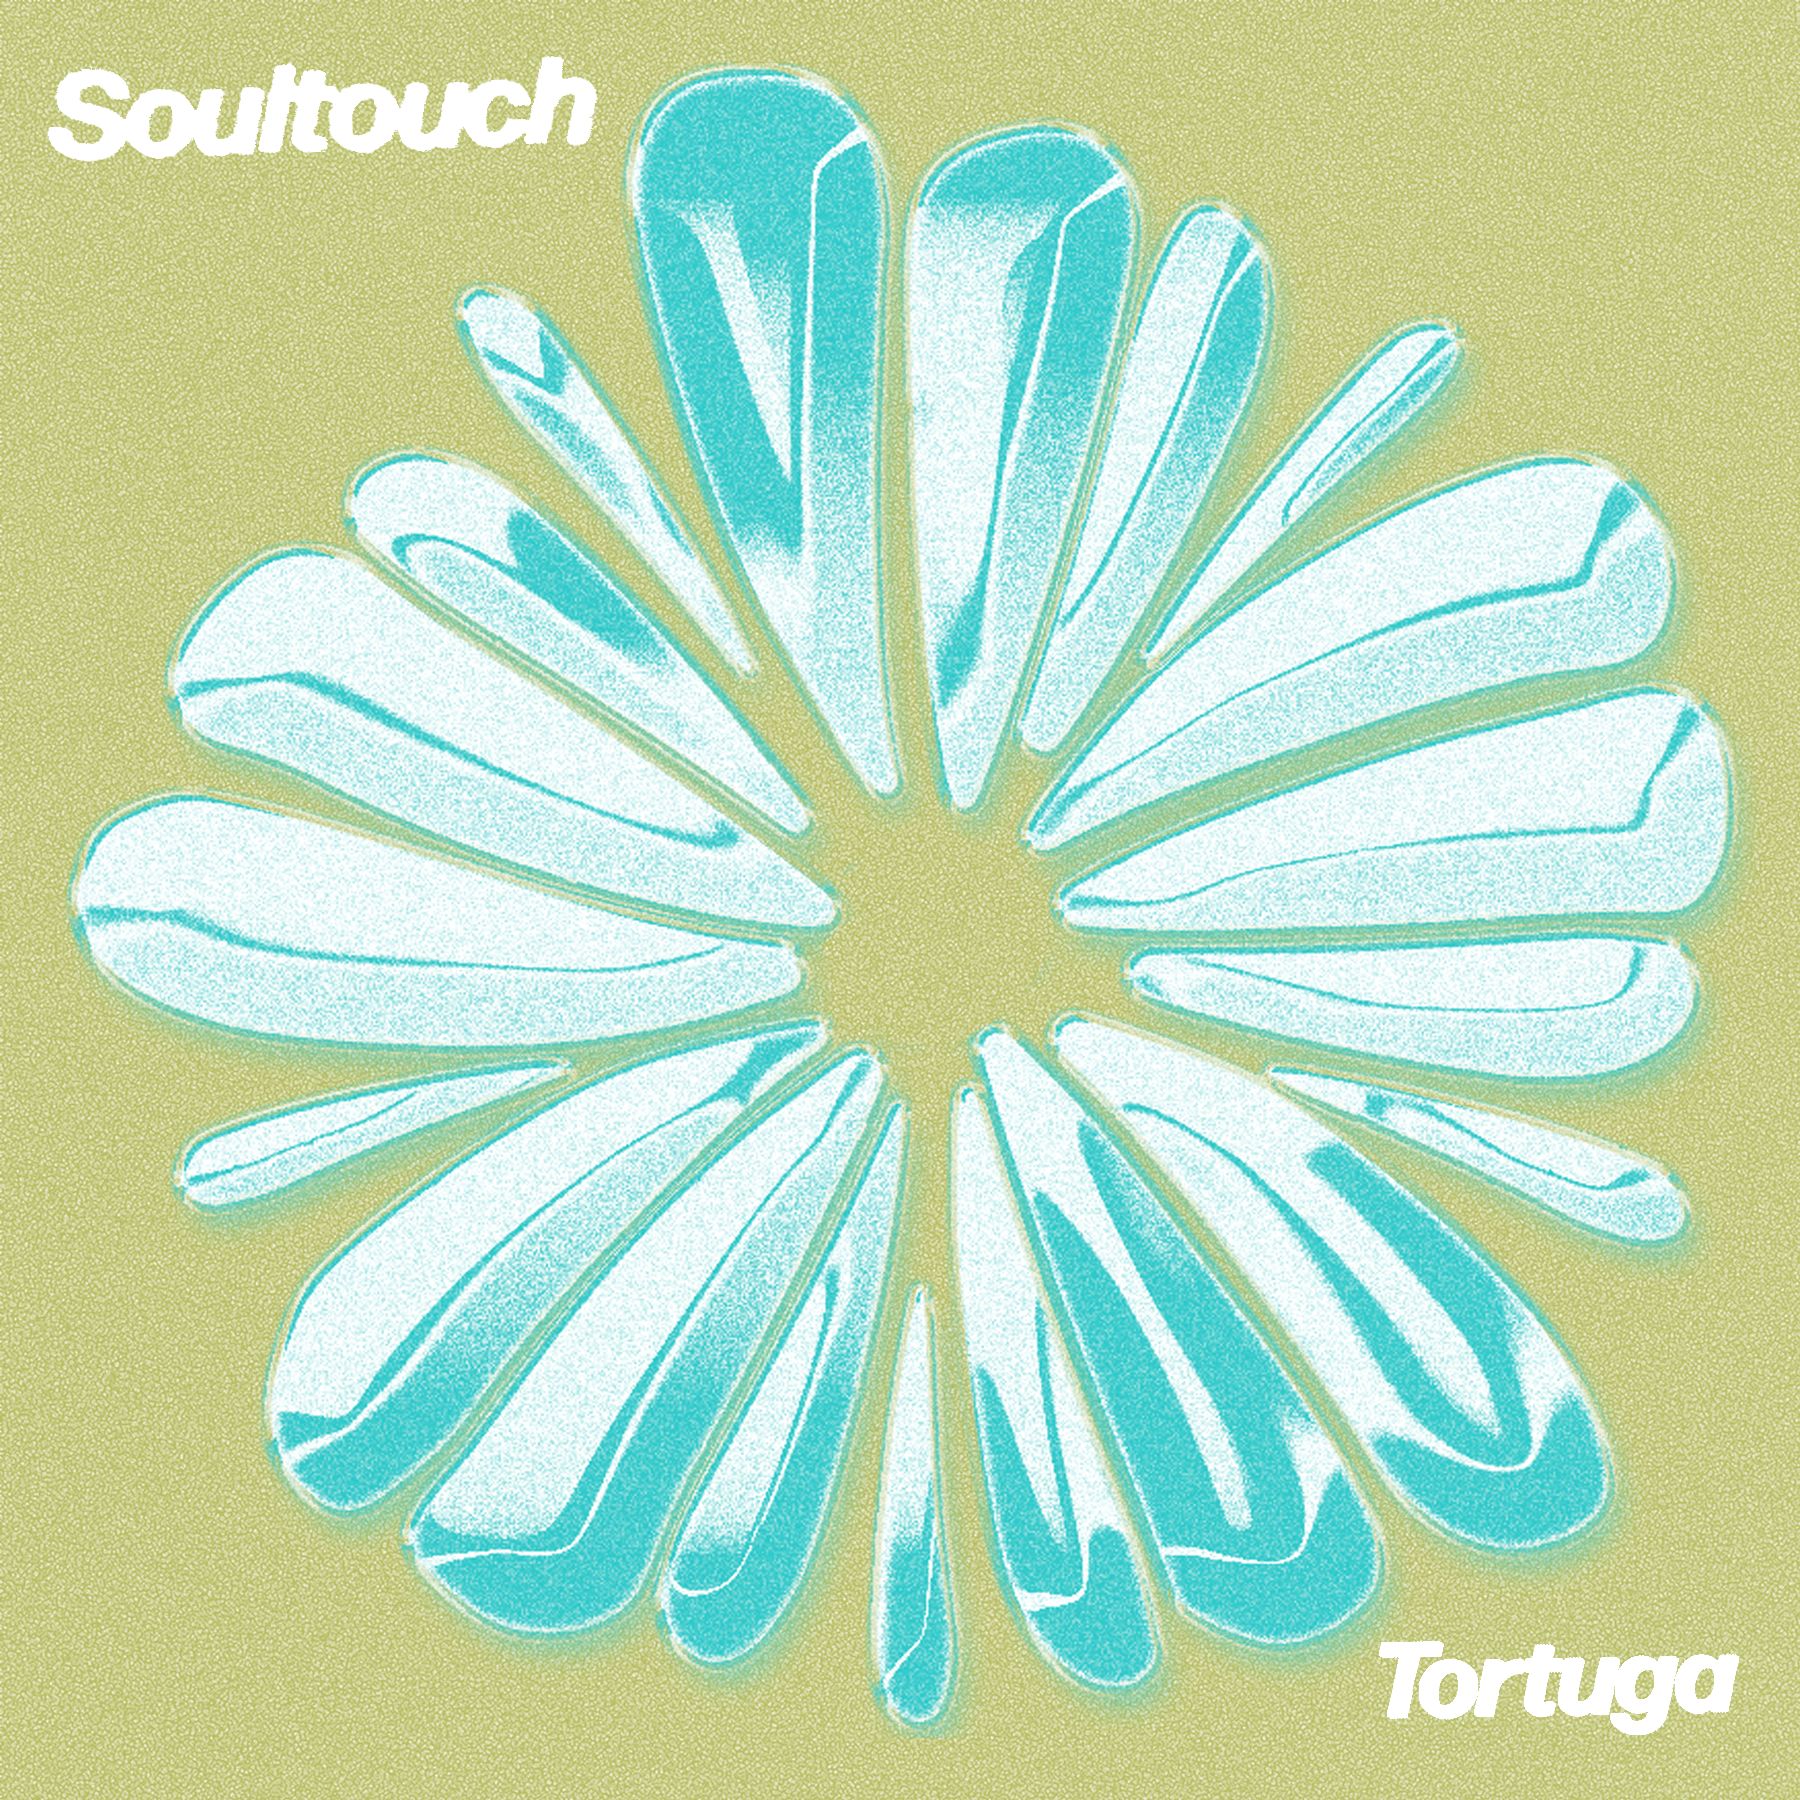 ڈاؤن لوڈ کریں PREMIERE : Tortuga - Soultouch